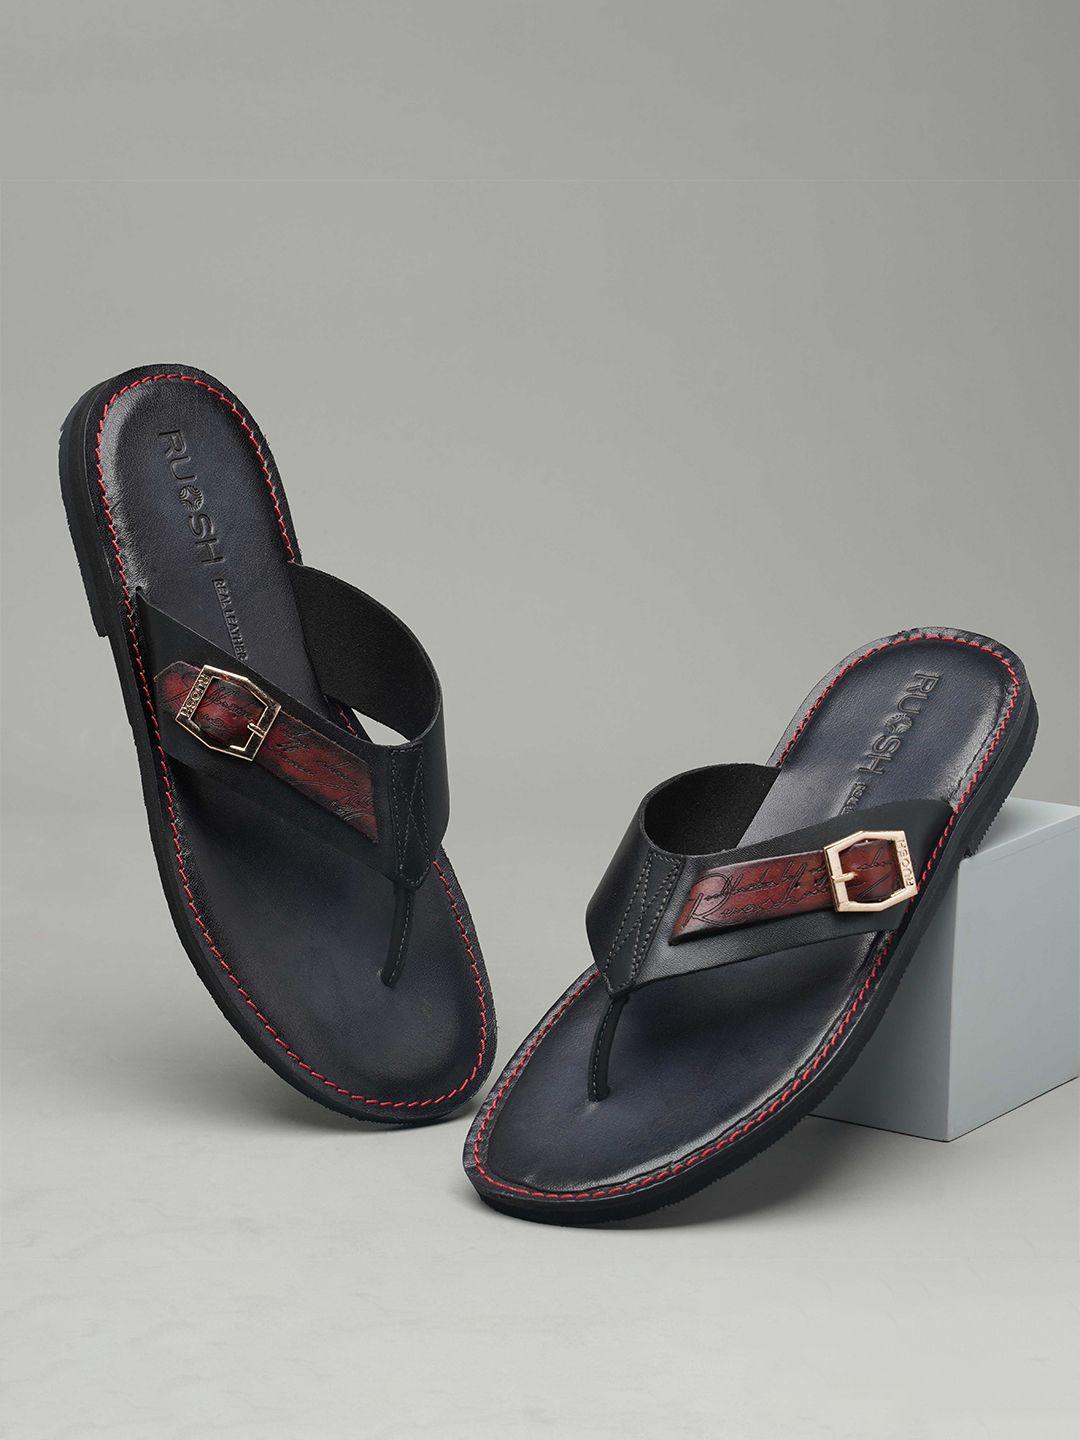 Ruosh Men Black & Gold-Toned Leather Comfort Sandals